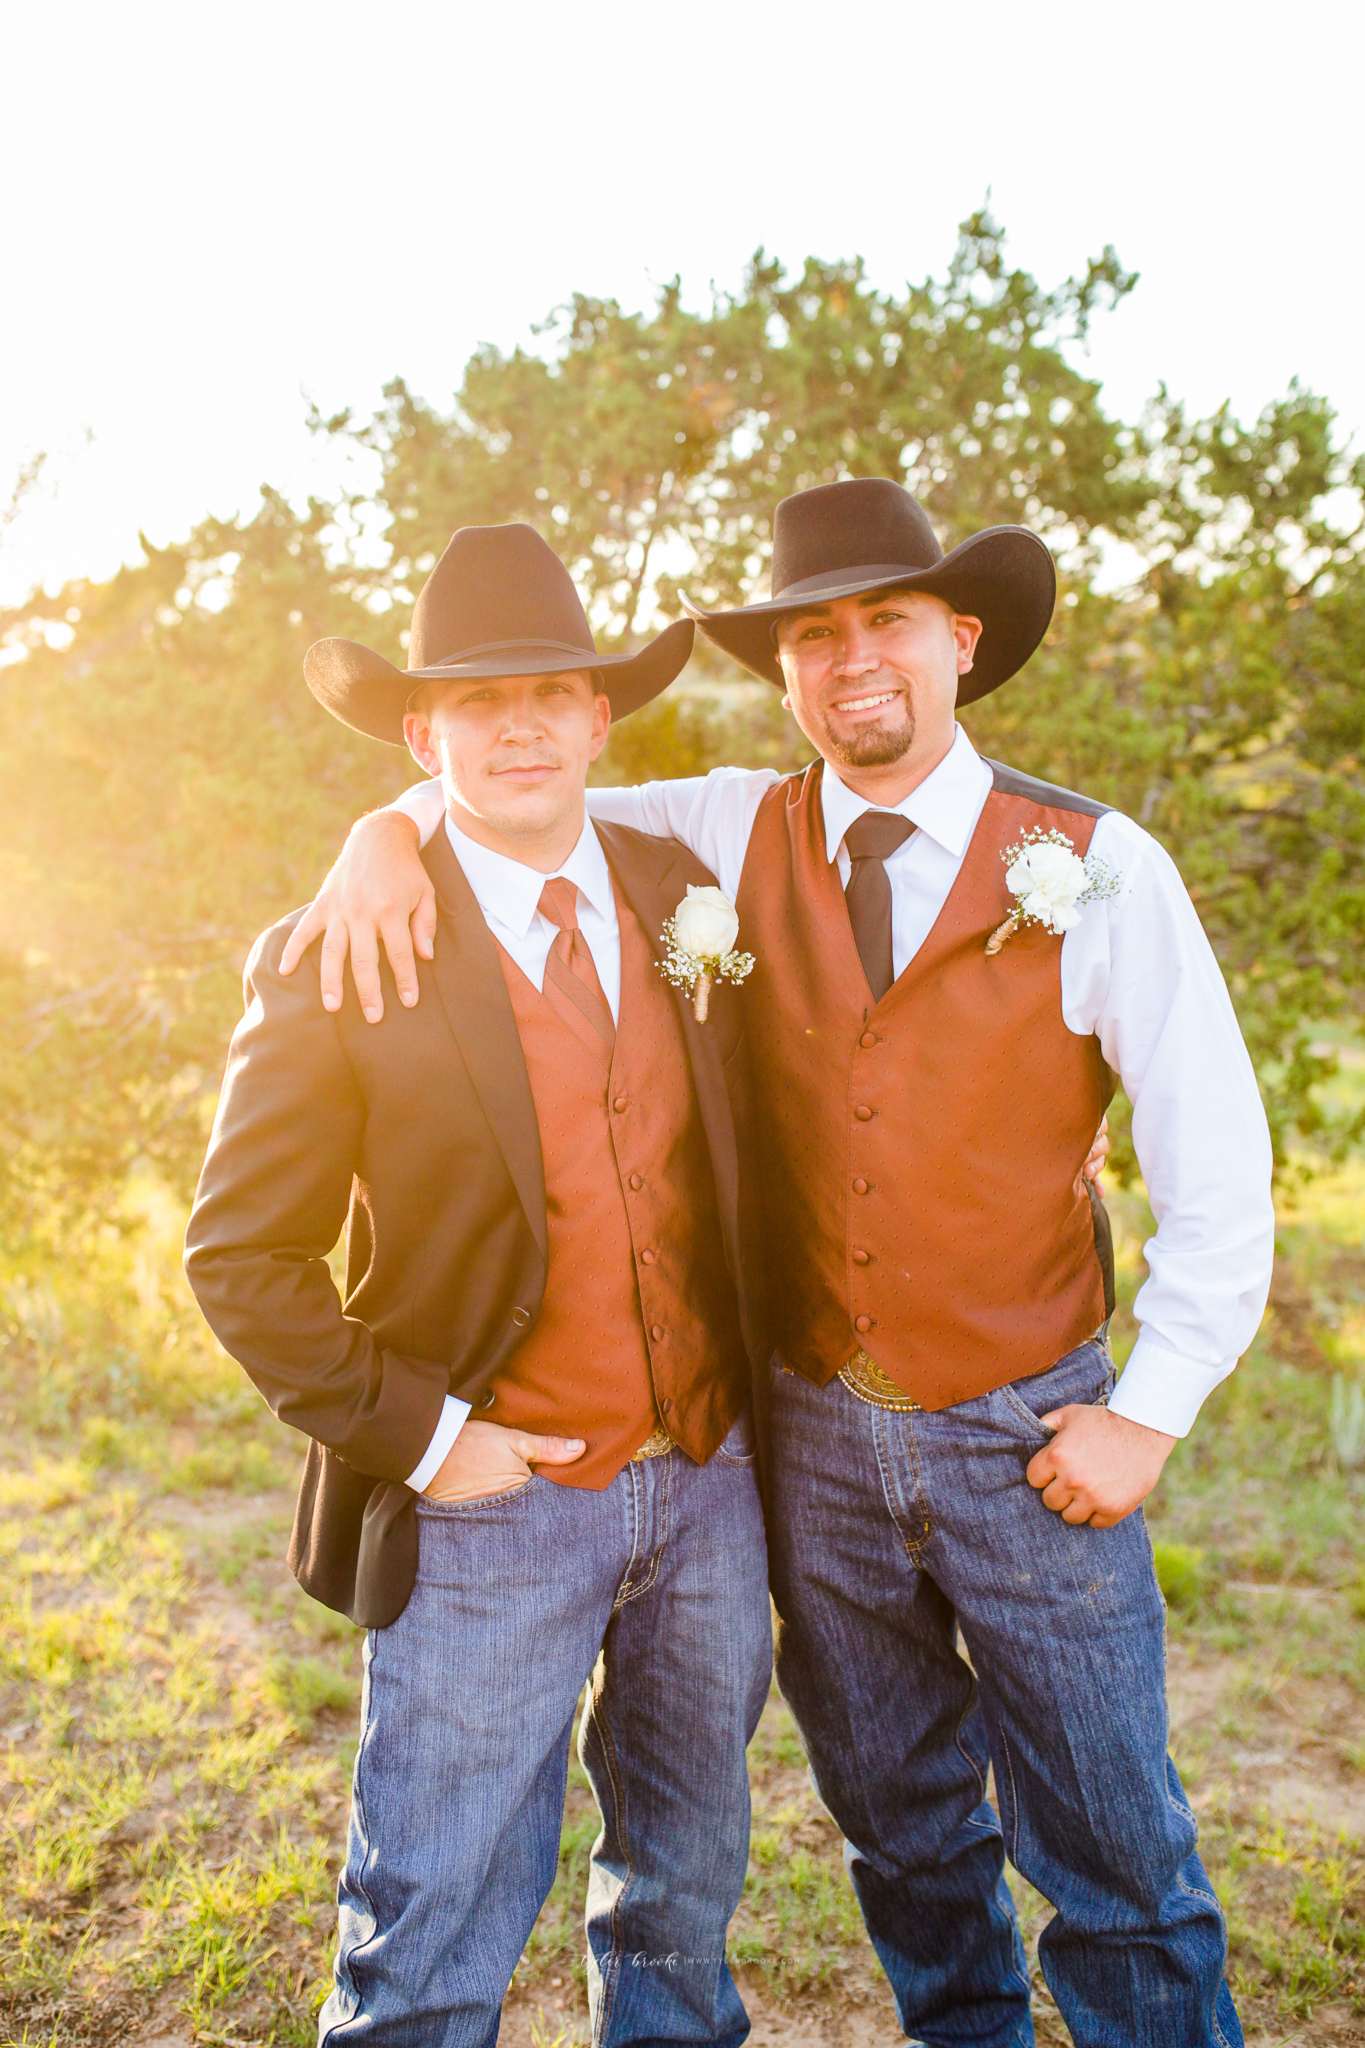 Edgewood New Mexico_Country Wedding Photographer_www.tylerbrooke.com_Kate Kauffman (29 of 35)